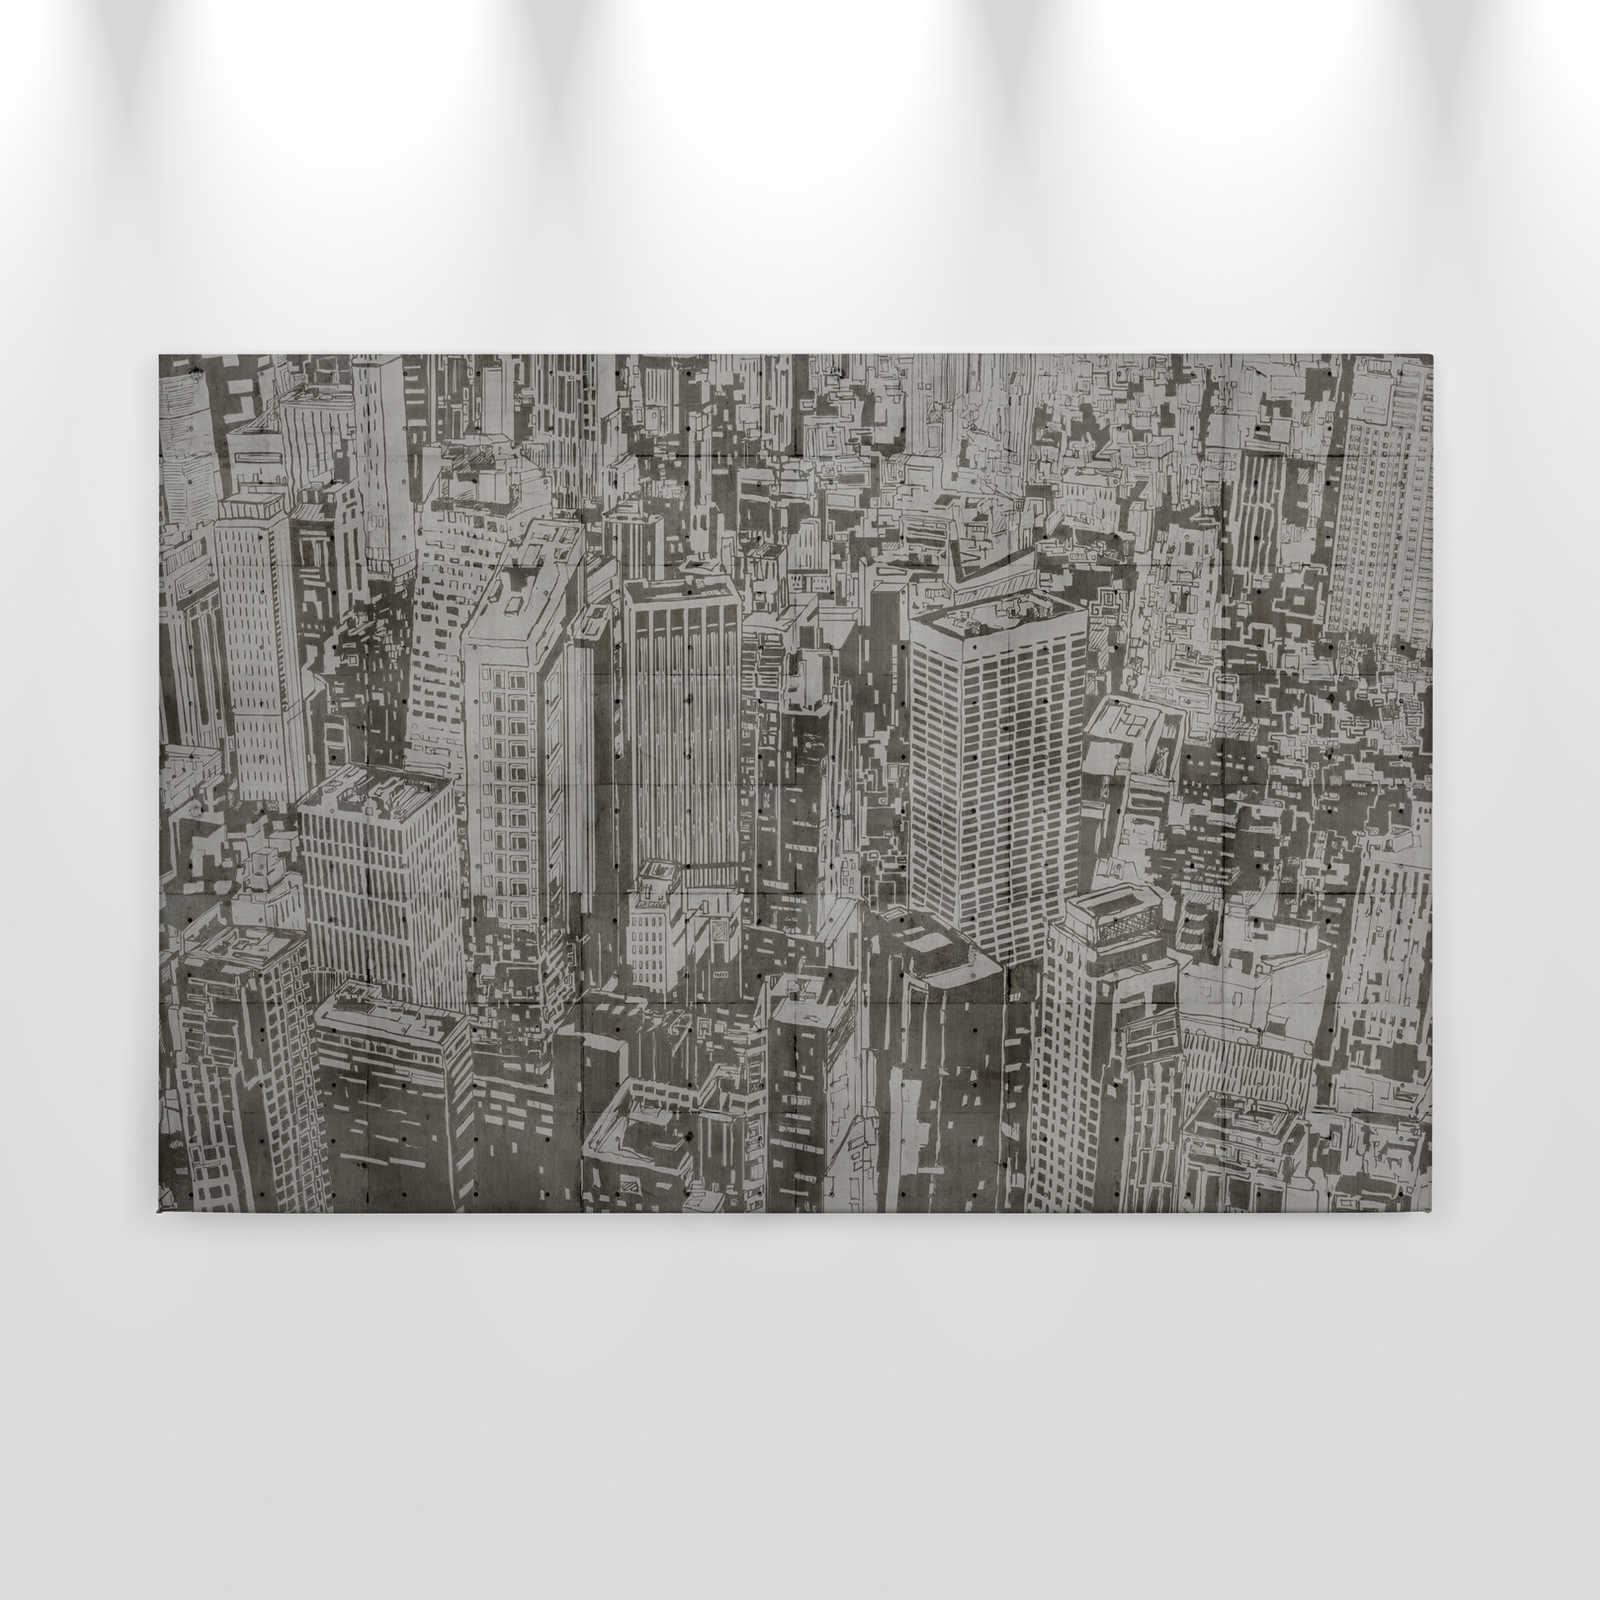             Downtown 2 - Natura qualita consistenza in cemento dipinto su tela New York Look - 0,90 m x 0,60 m
        